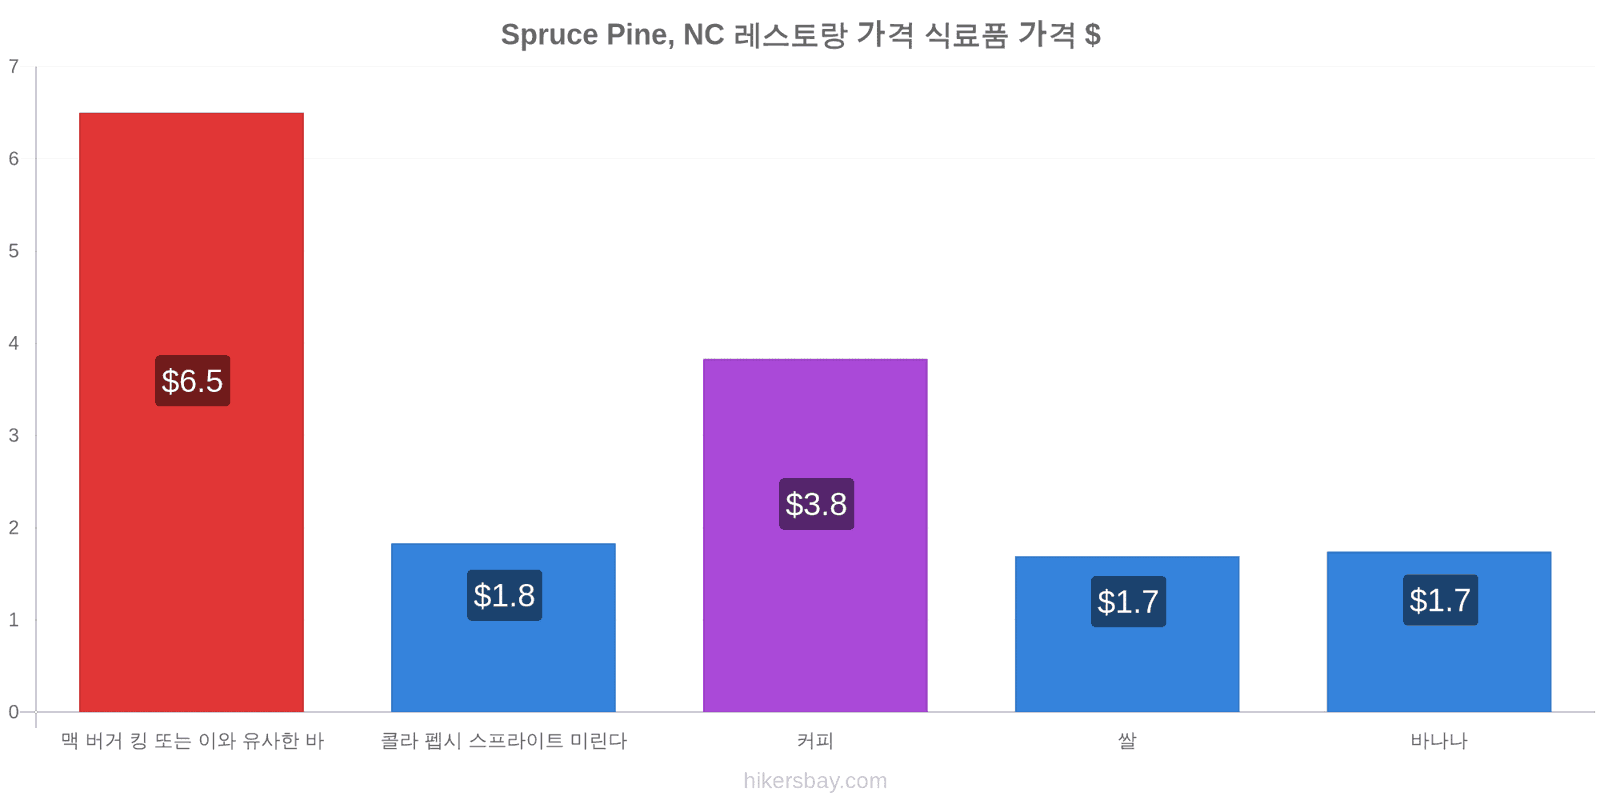 Spruce Pine, NC 가격 변동 hikersbay.com